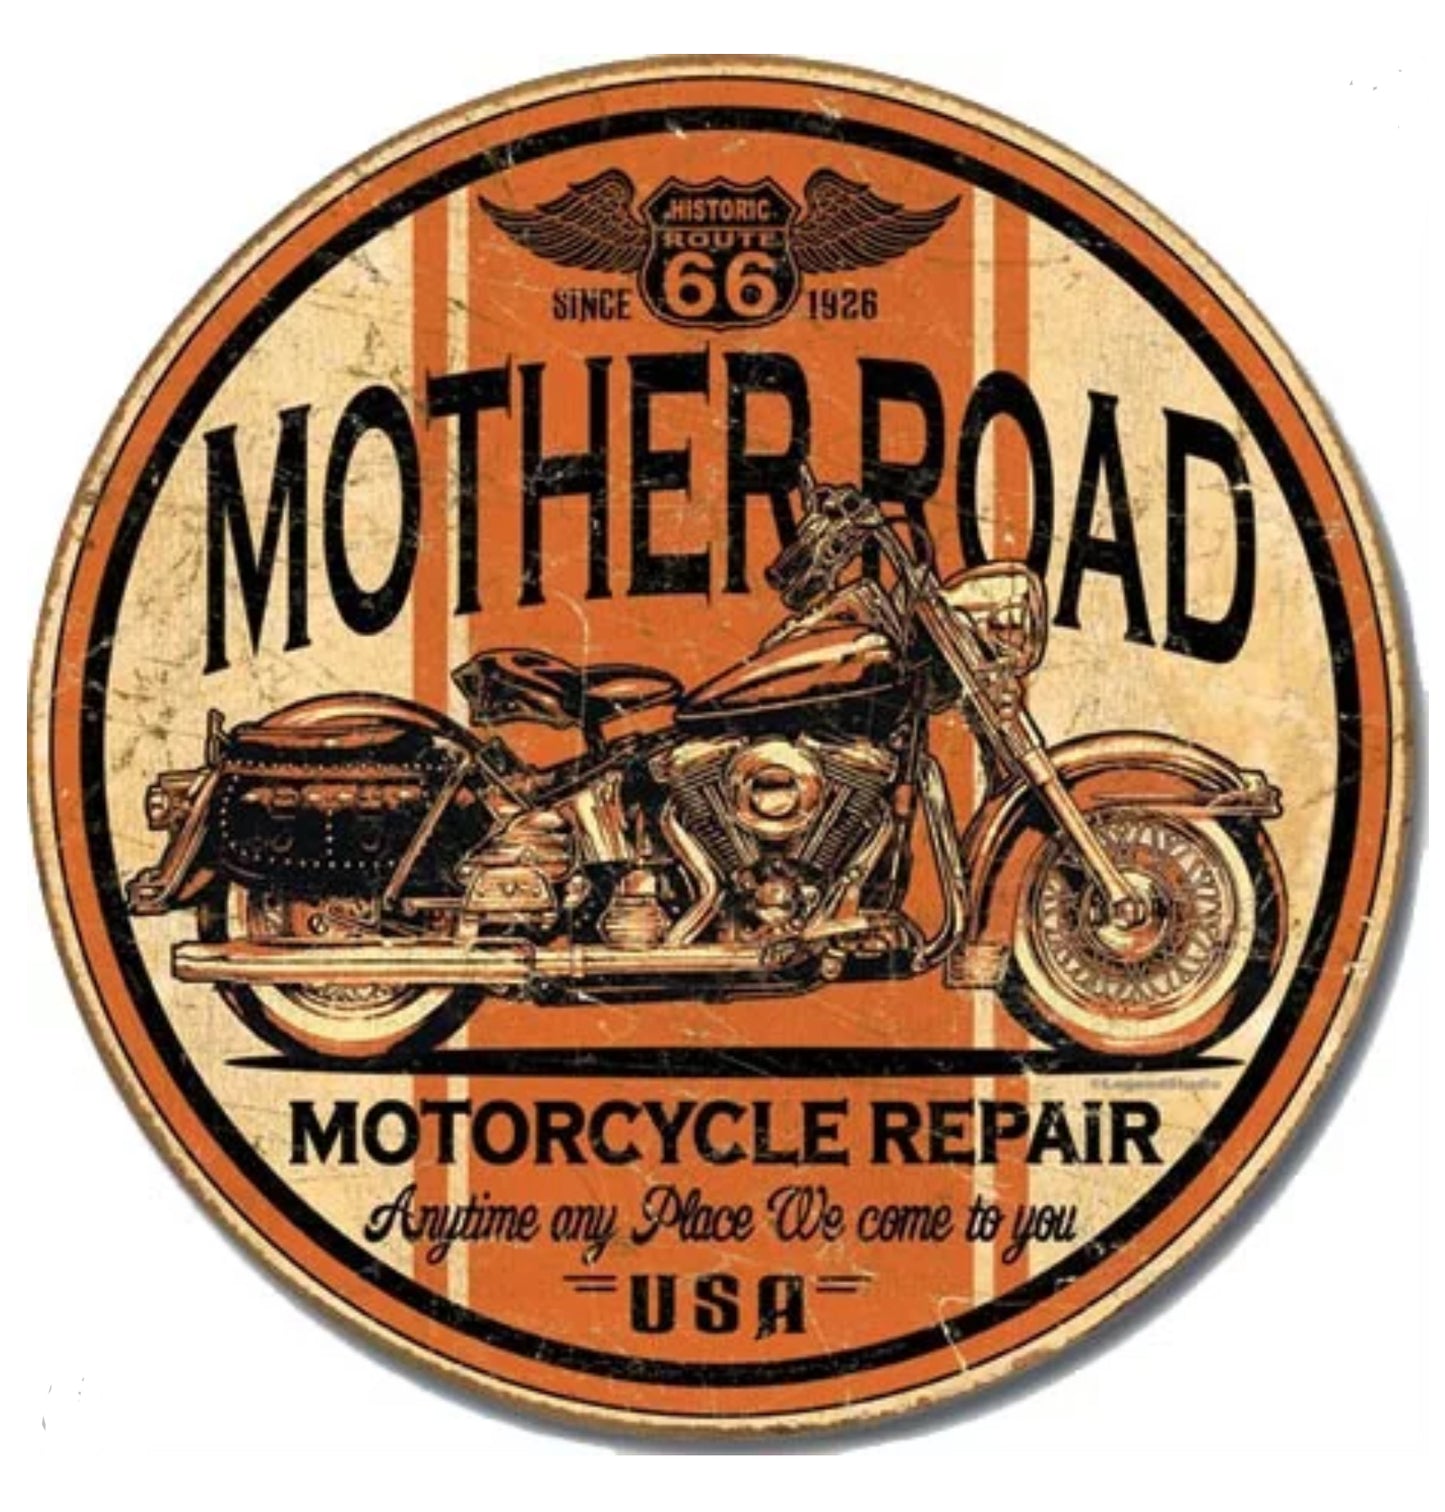 Blechschild "Mother Road Motorcycle"